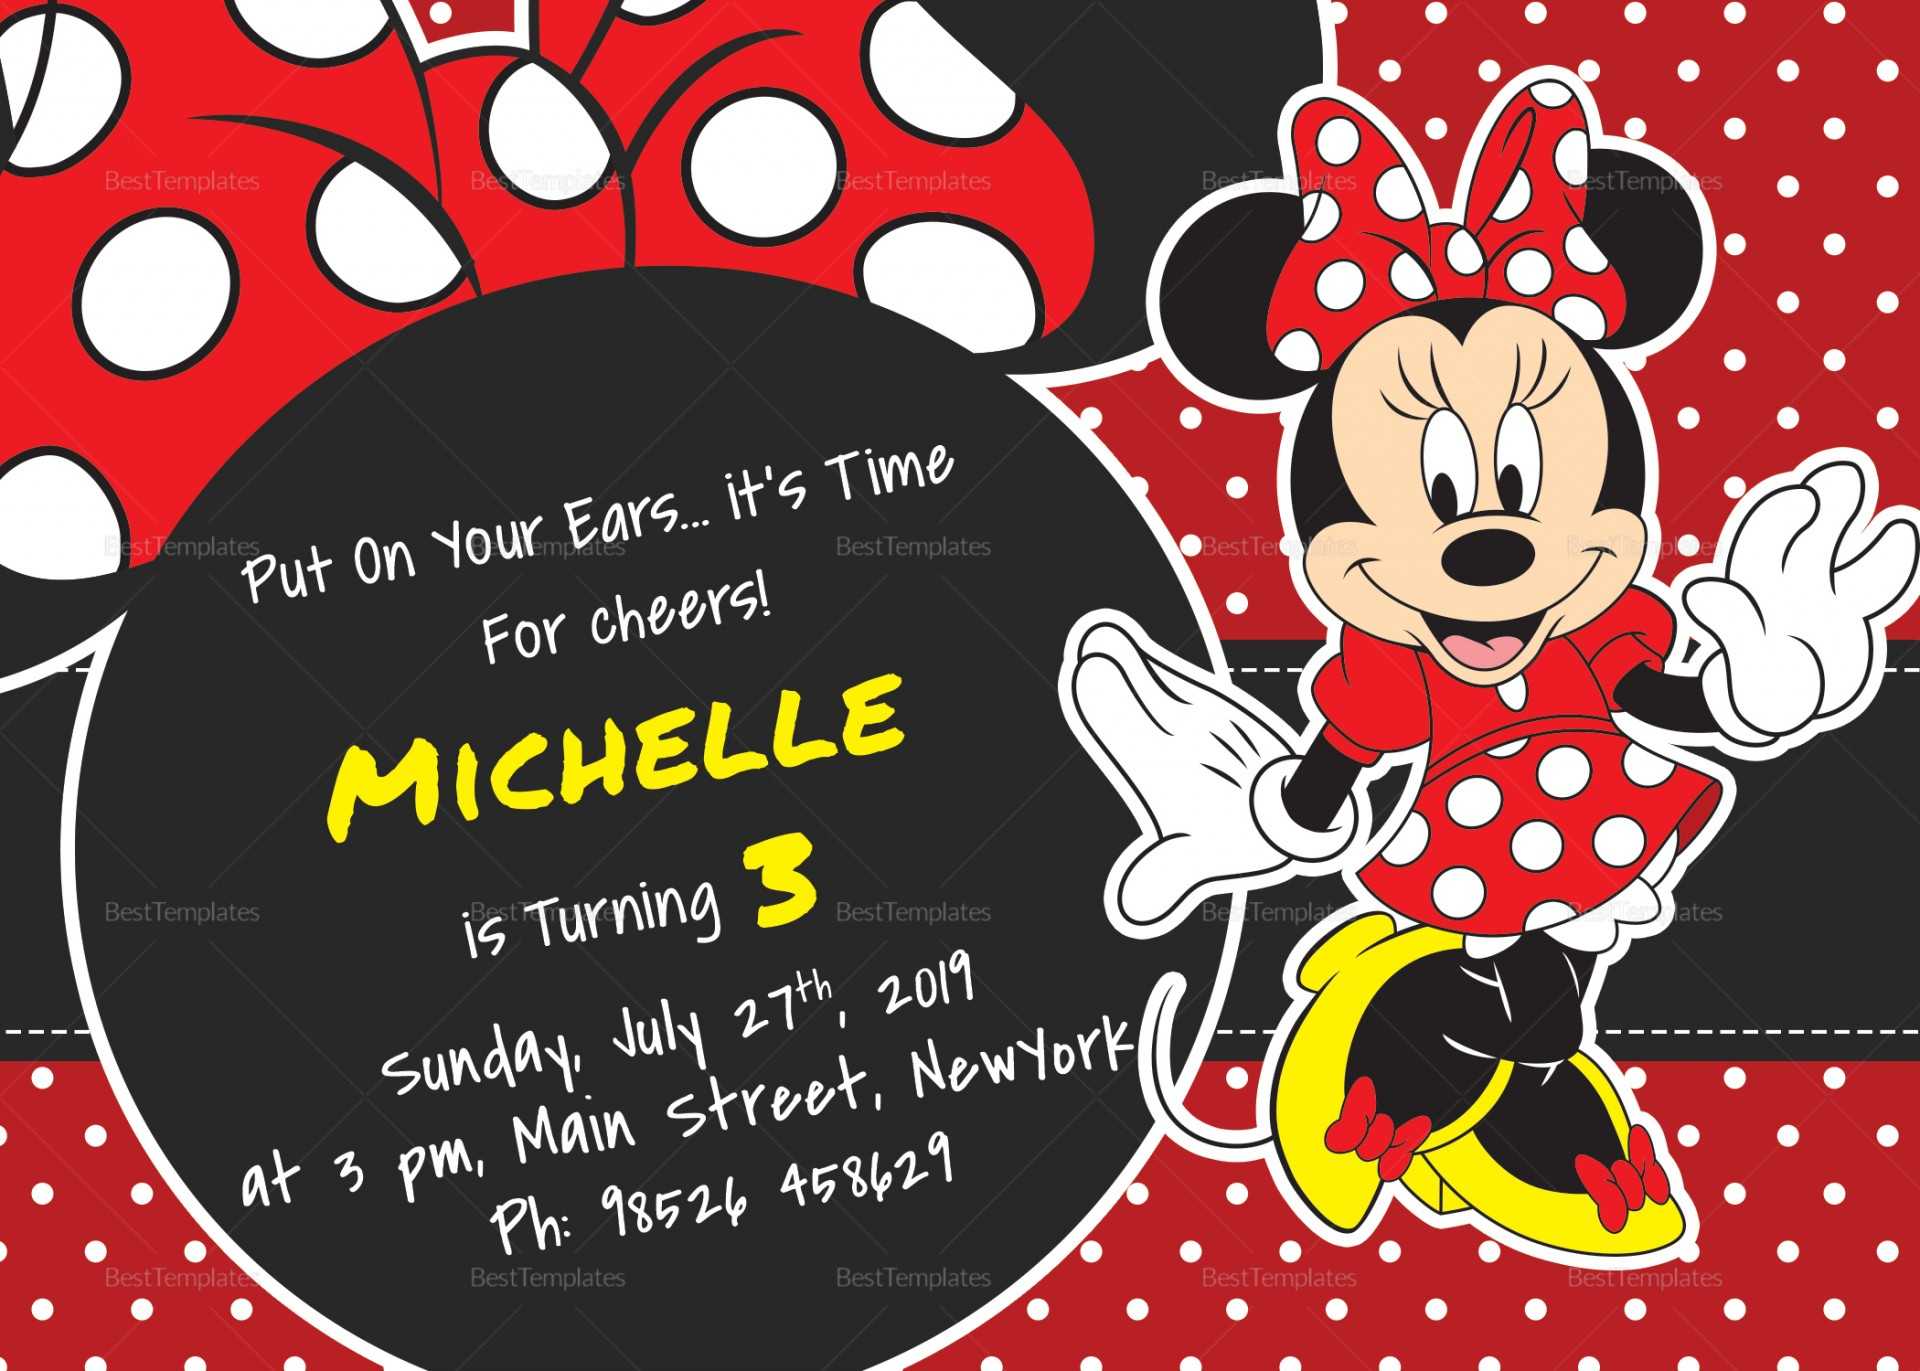 005 Template Ideas Minnie Mouse Birthday Invitation Striking Regarding Minnie Mouse Card Templates